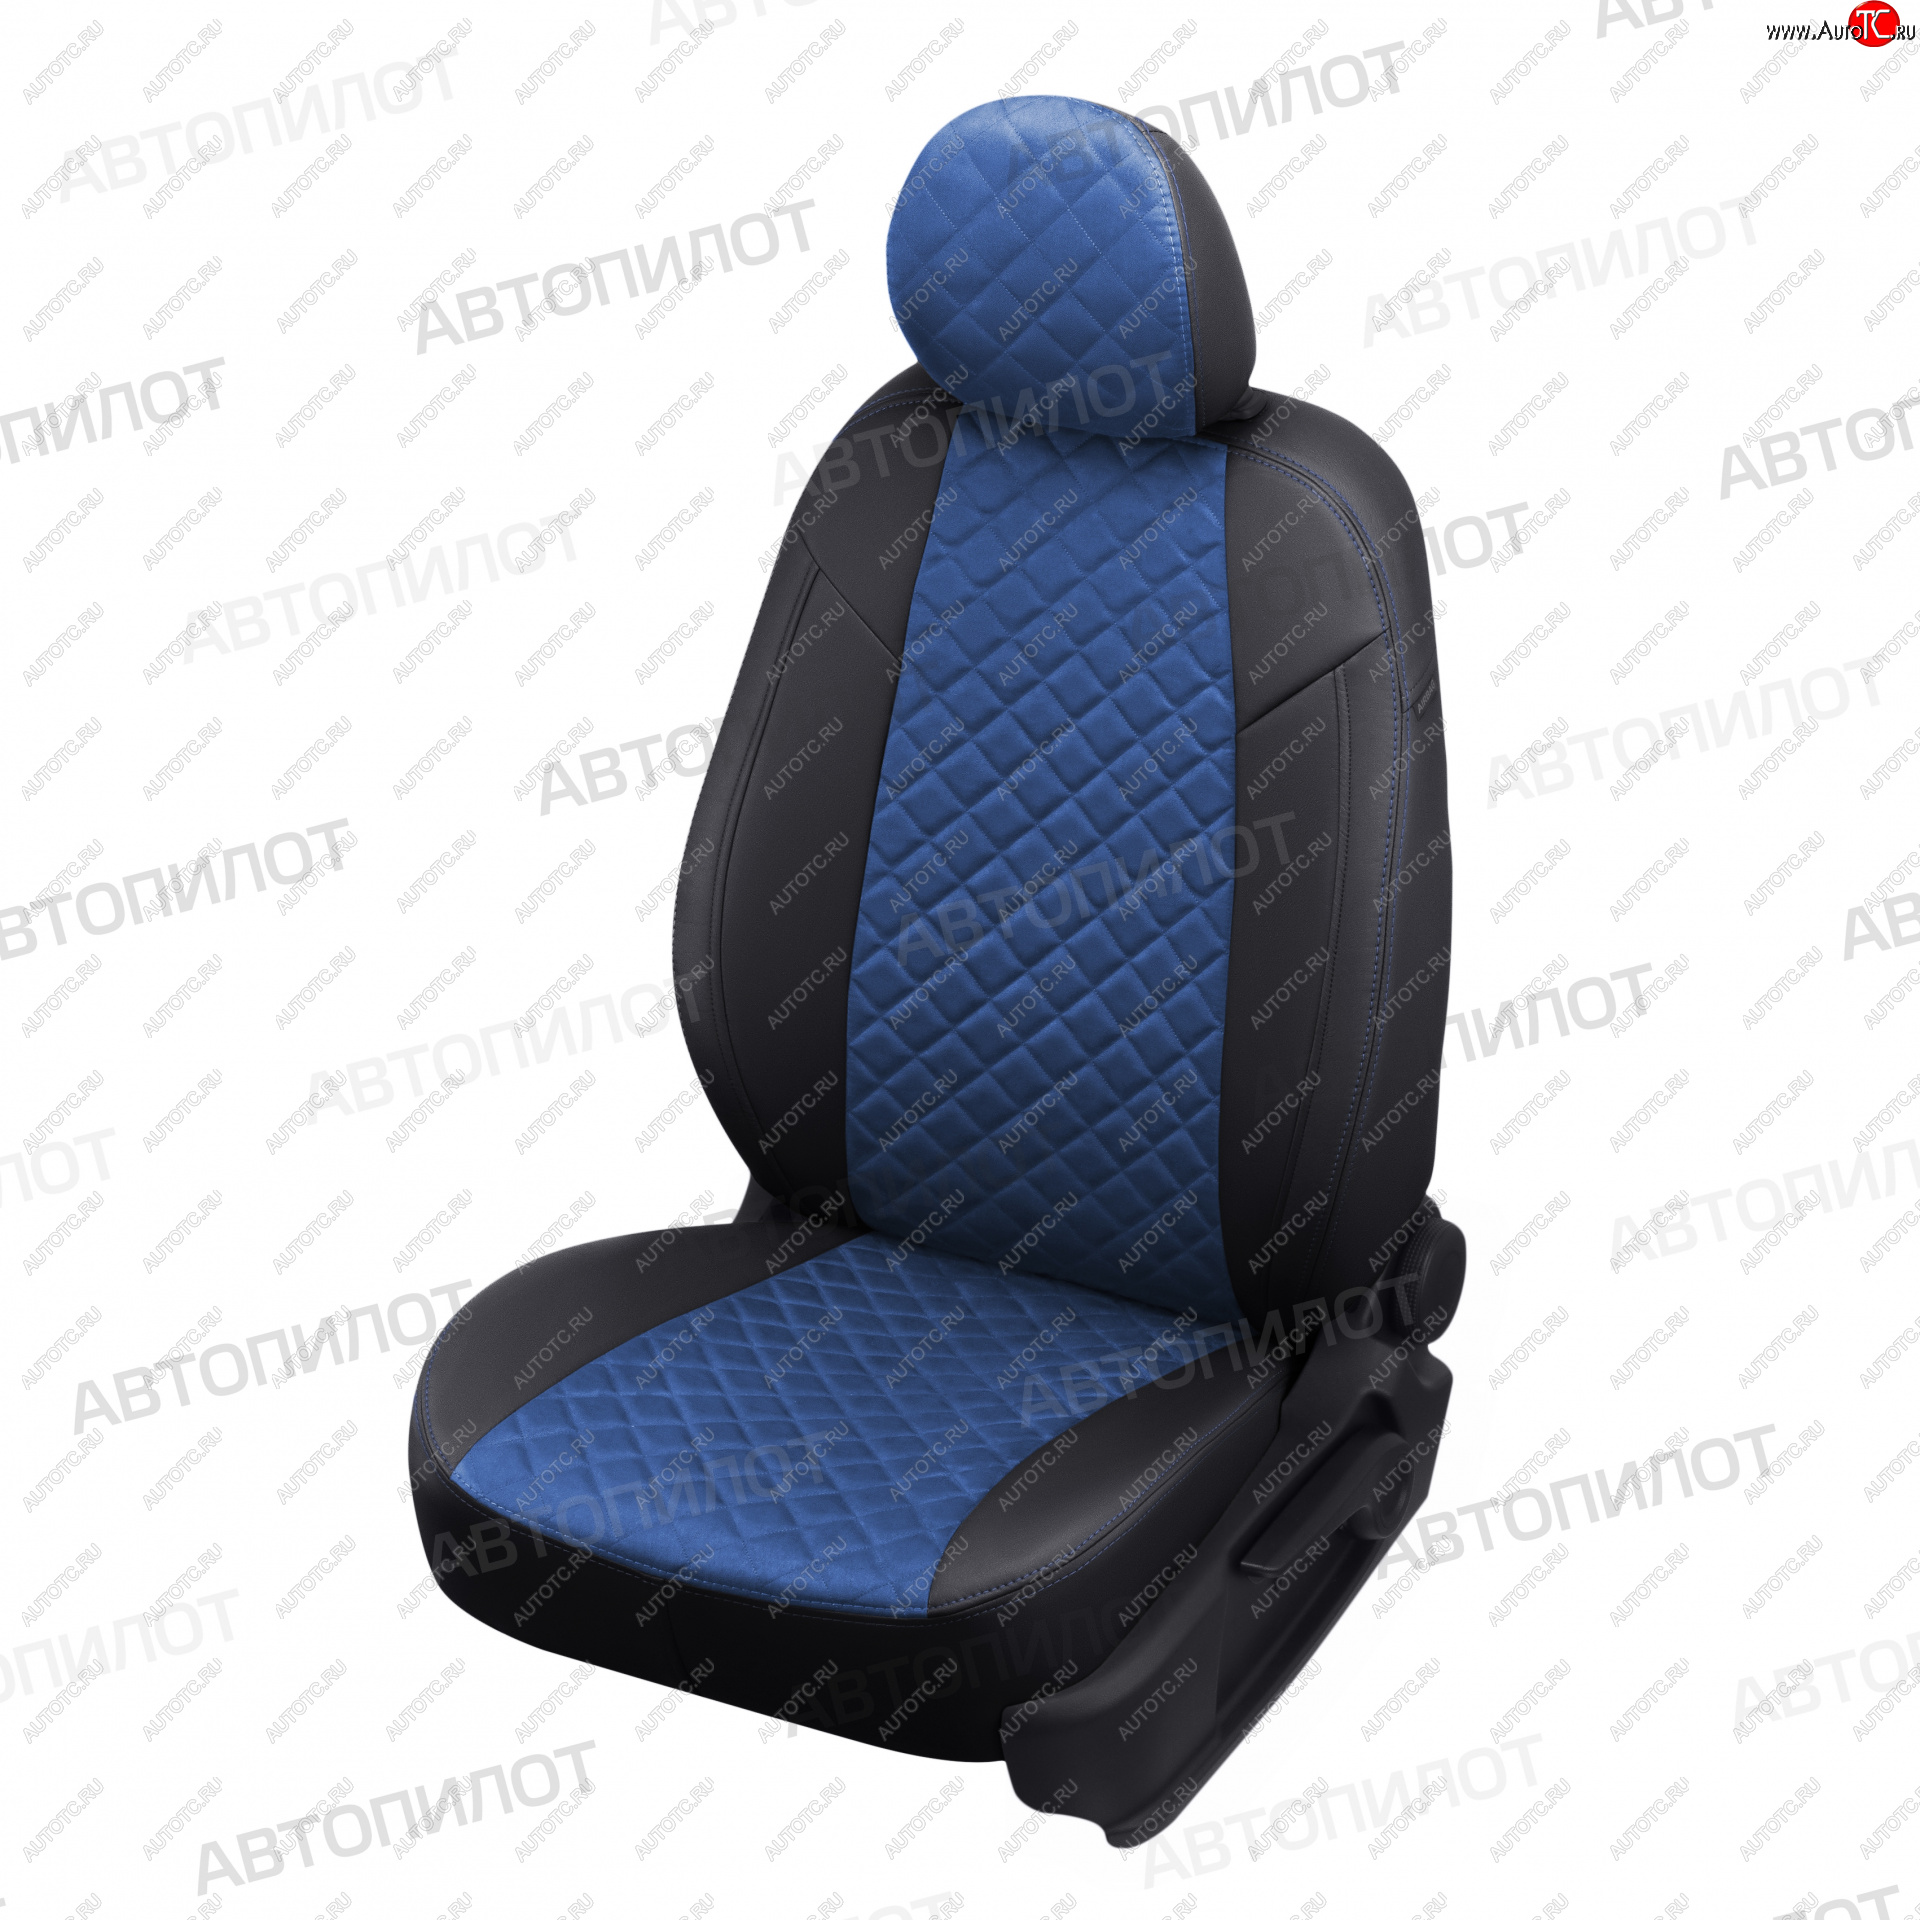 13 999 р. Чехлы сидений (экокожа/алькантара) Автопилот Ромб  KIA Soul  2 PS (2014-2019) (черный/синий)